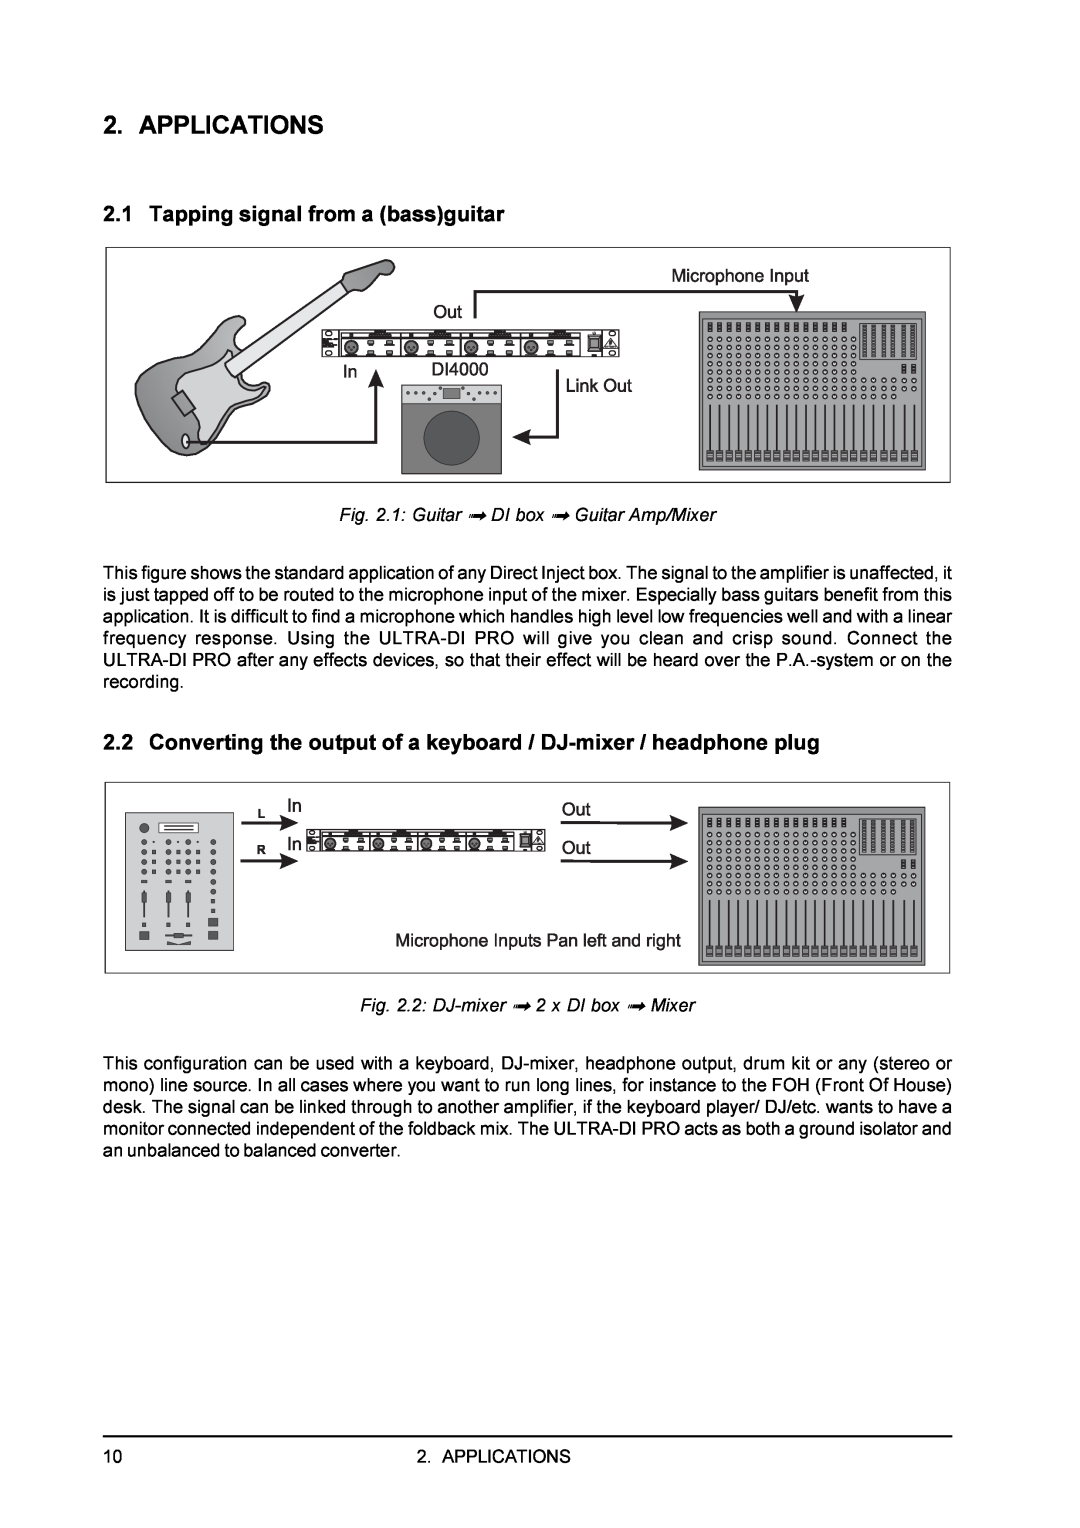 Behringer PRODI4000 user manual Applications, Tapping signal from a bassguitar, 1 Guitar ß DI box ß Guitar Amp/Mixer 